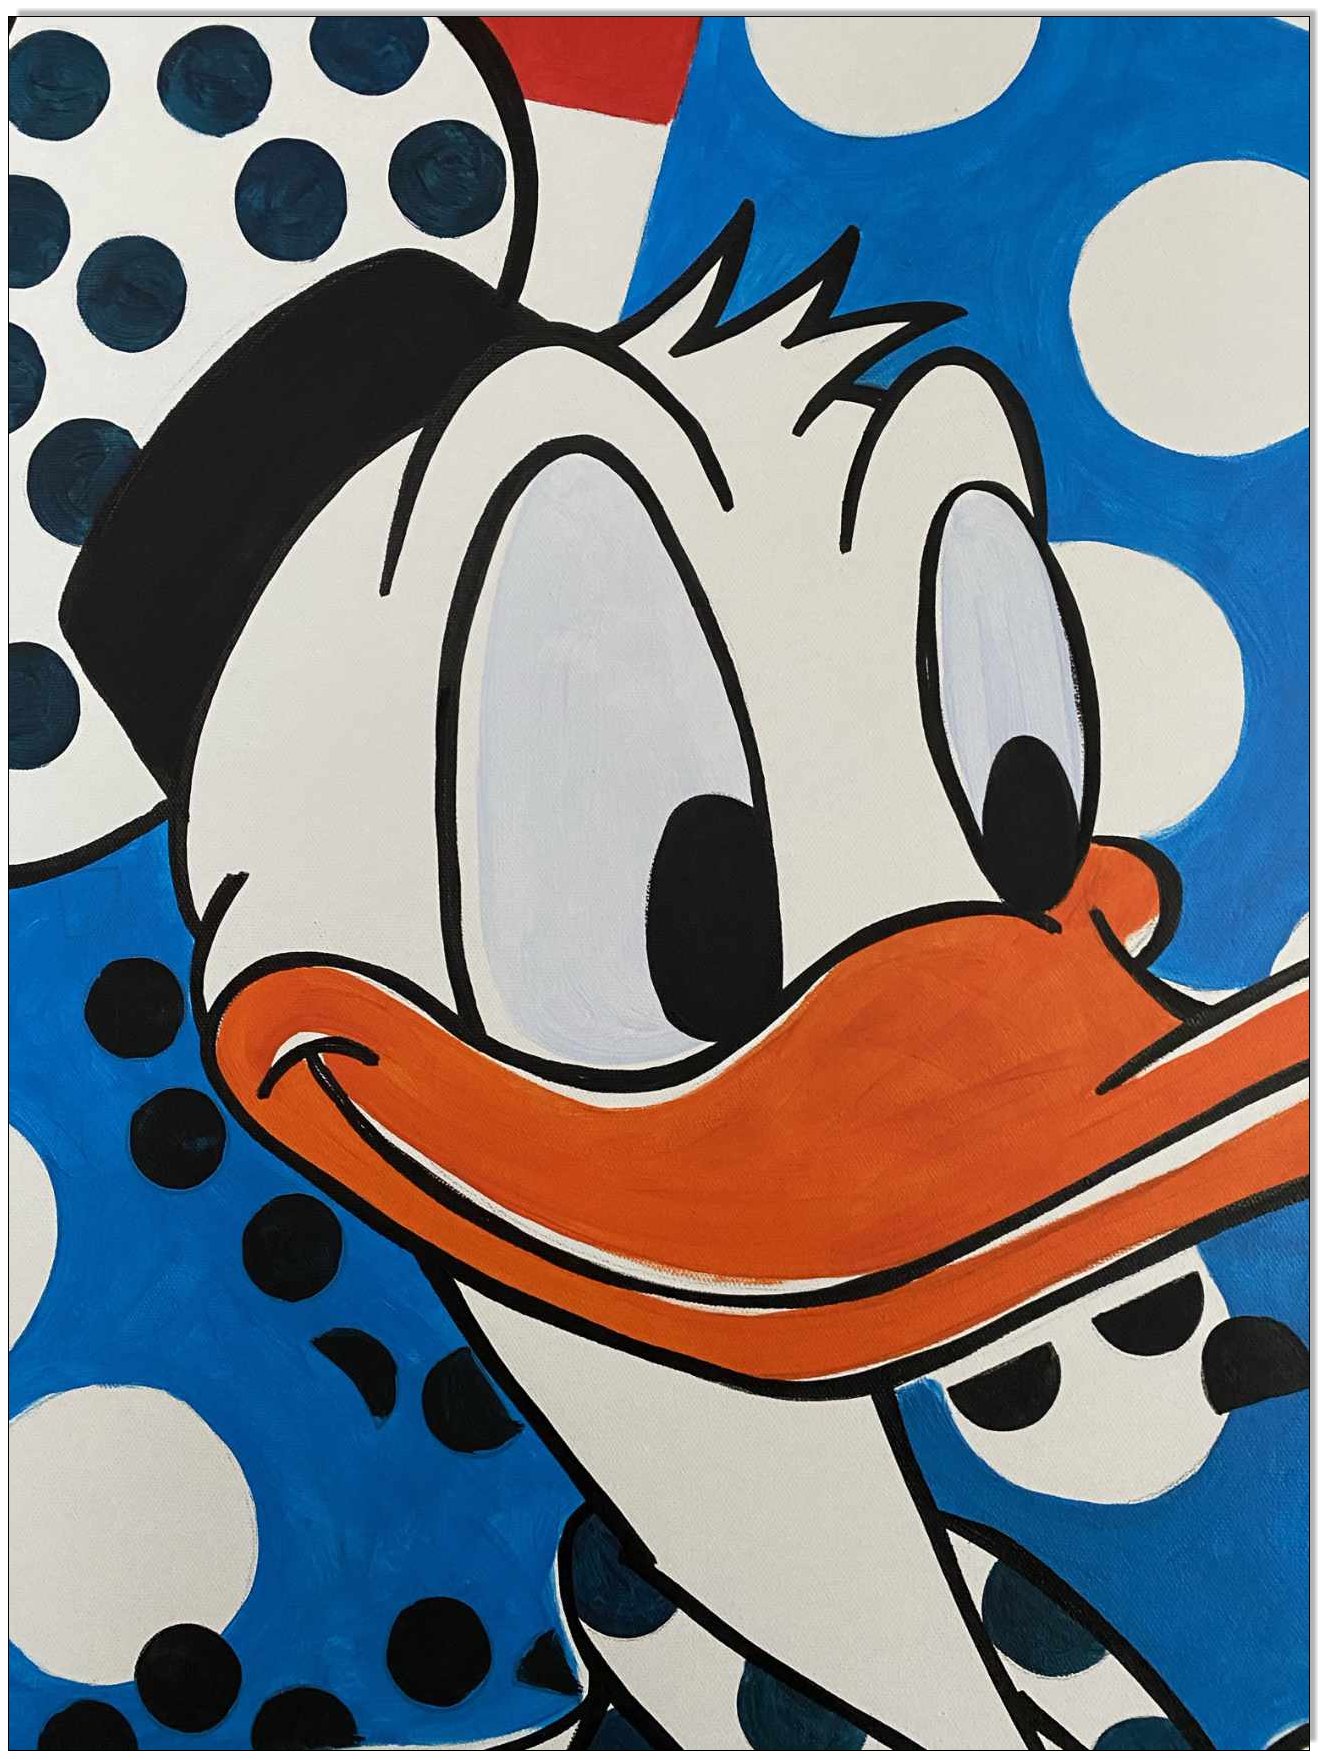 Doald Duck POP II - 40 x 40 cm 2